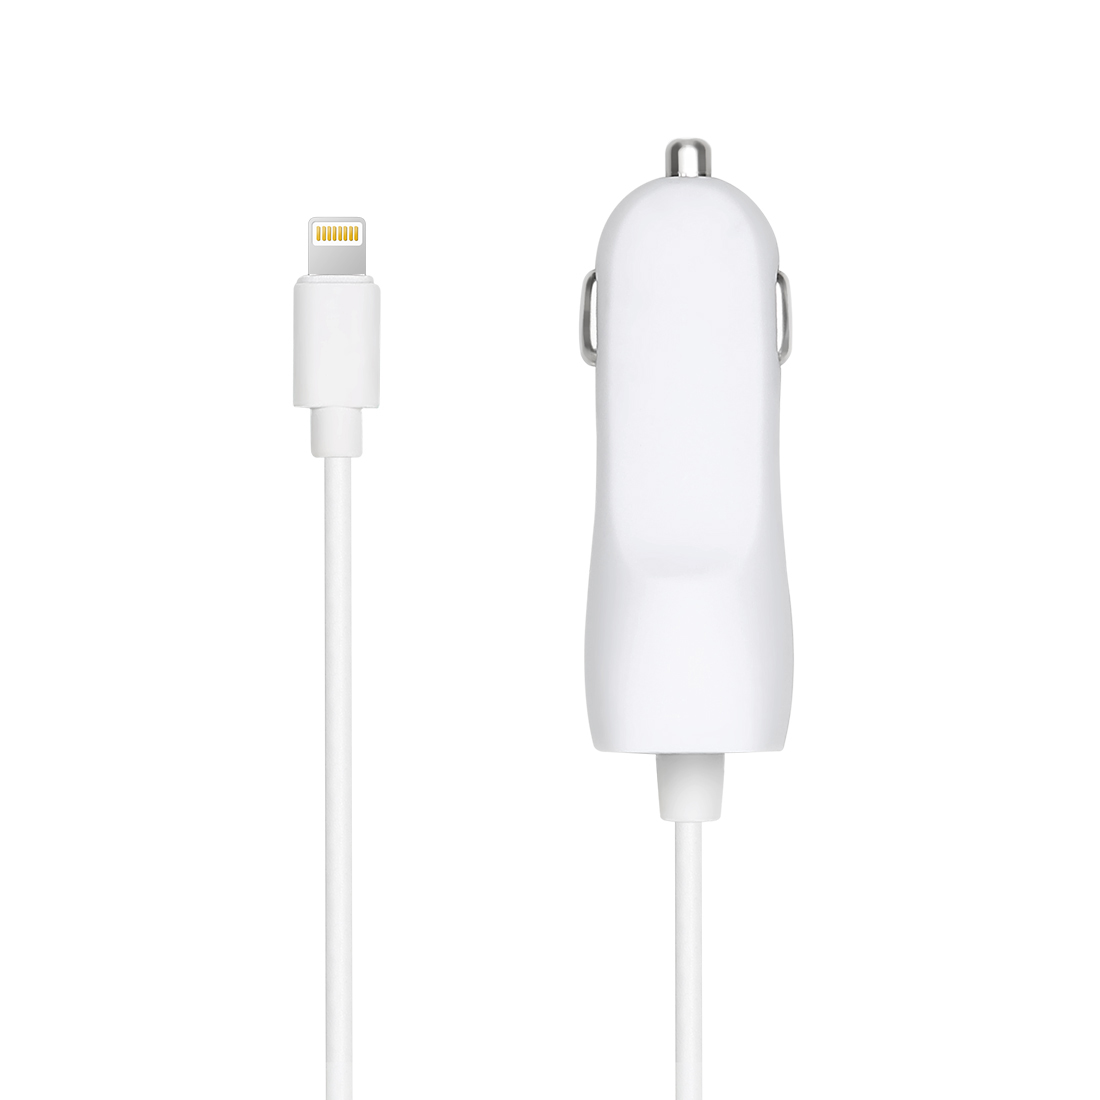 Apple MFi Lightning interface car charger